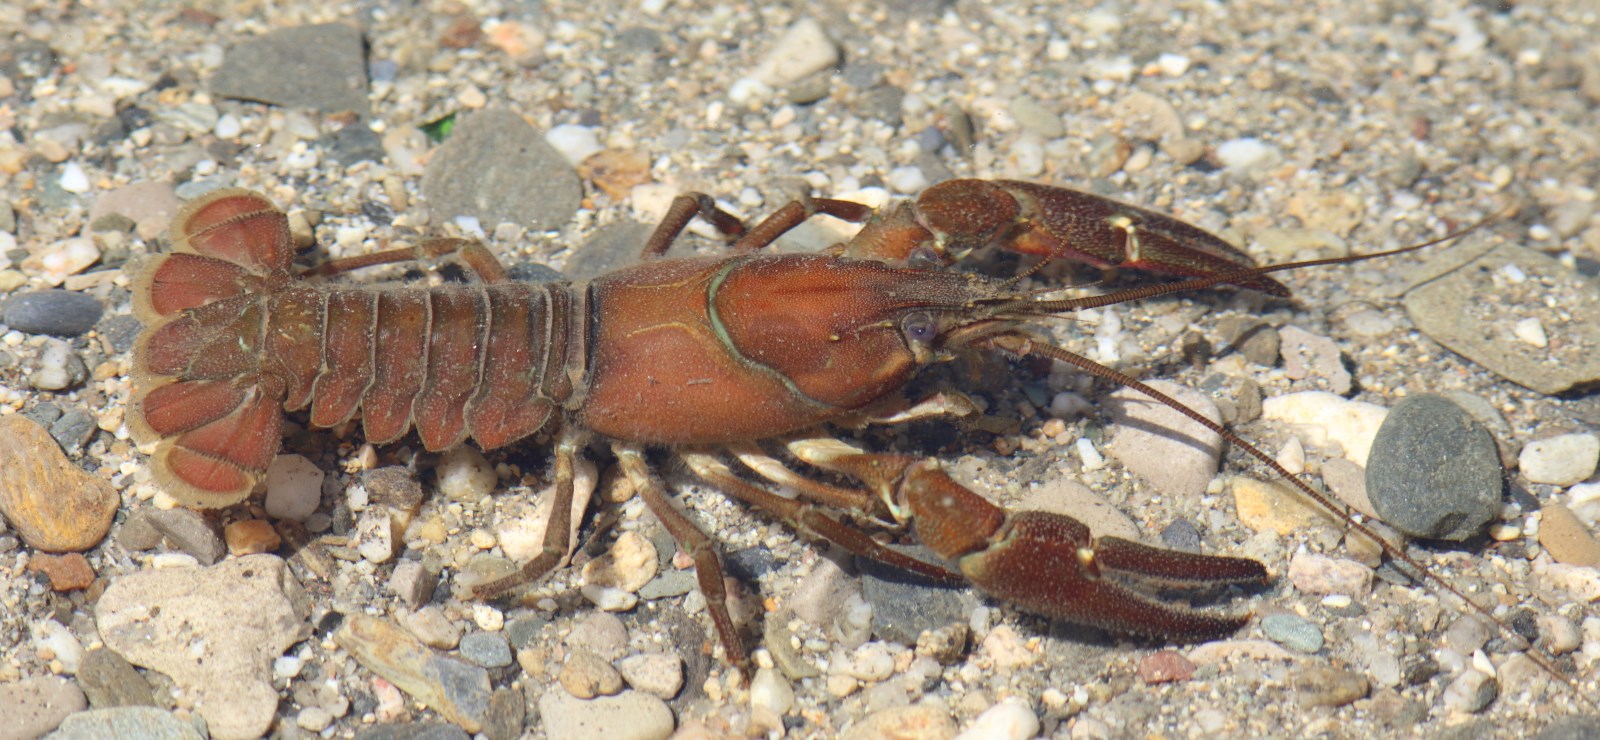 Californian signal crayfish (photo Geert De Knijf)